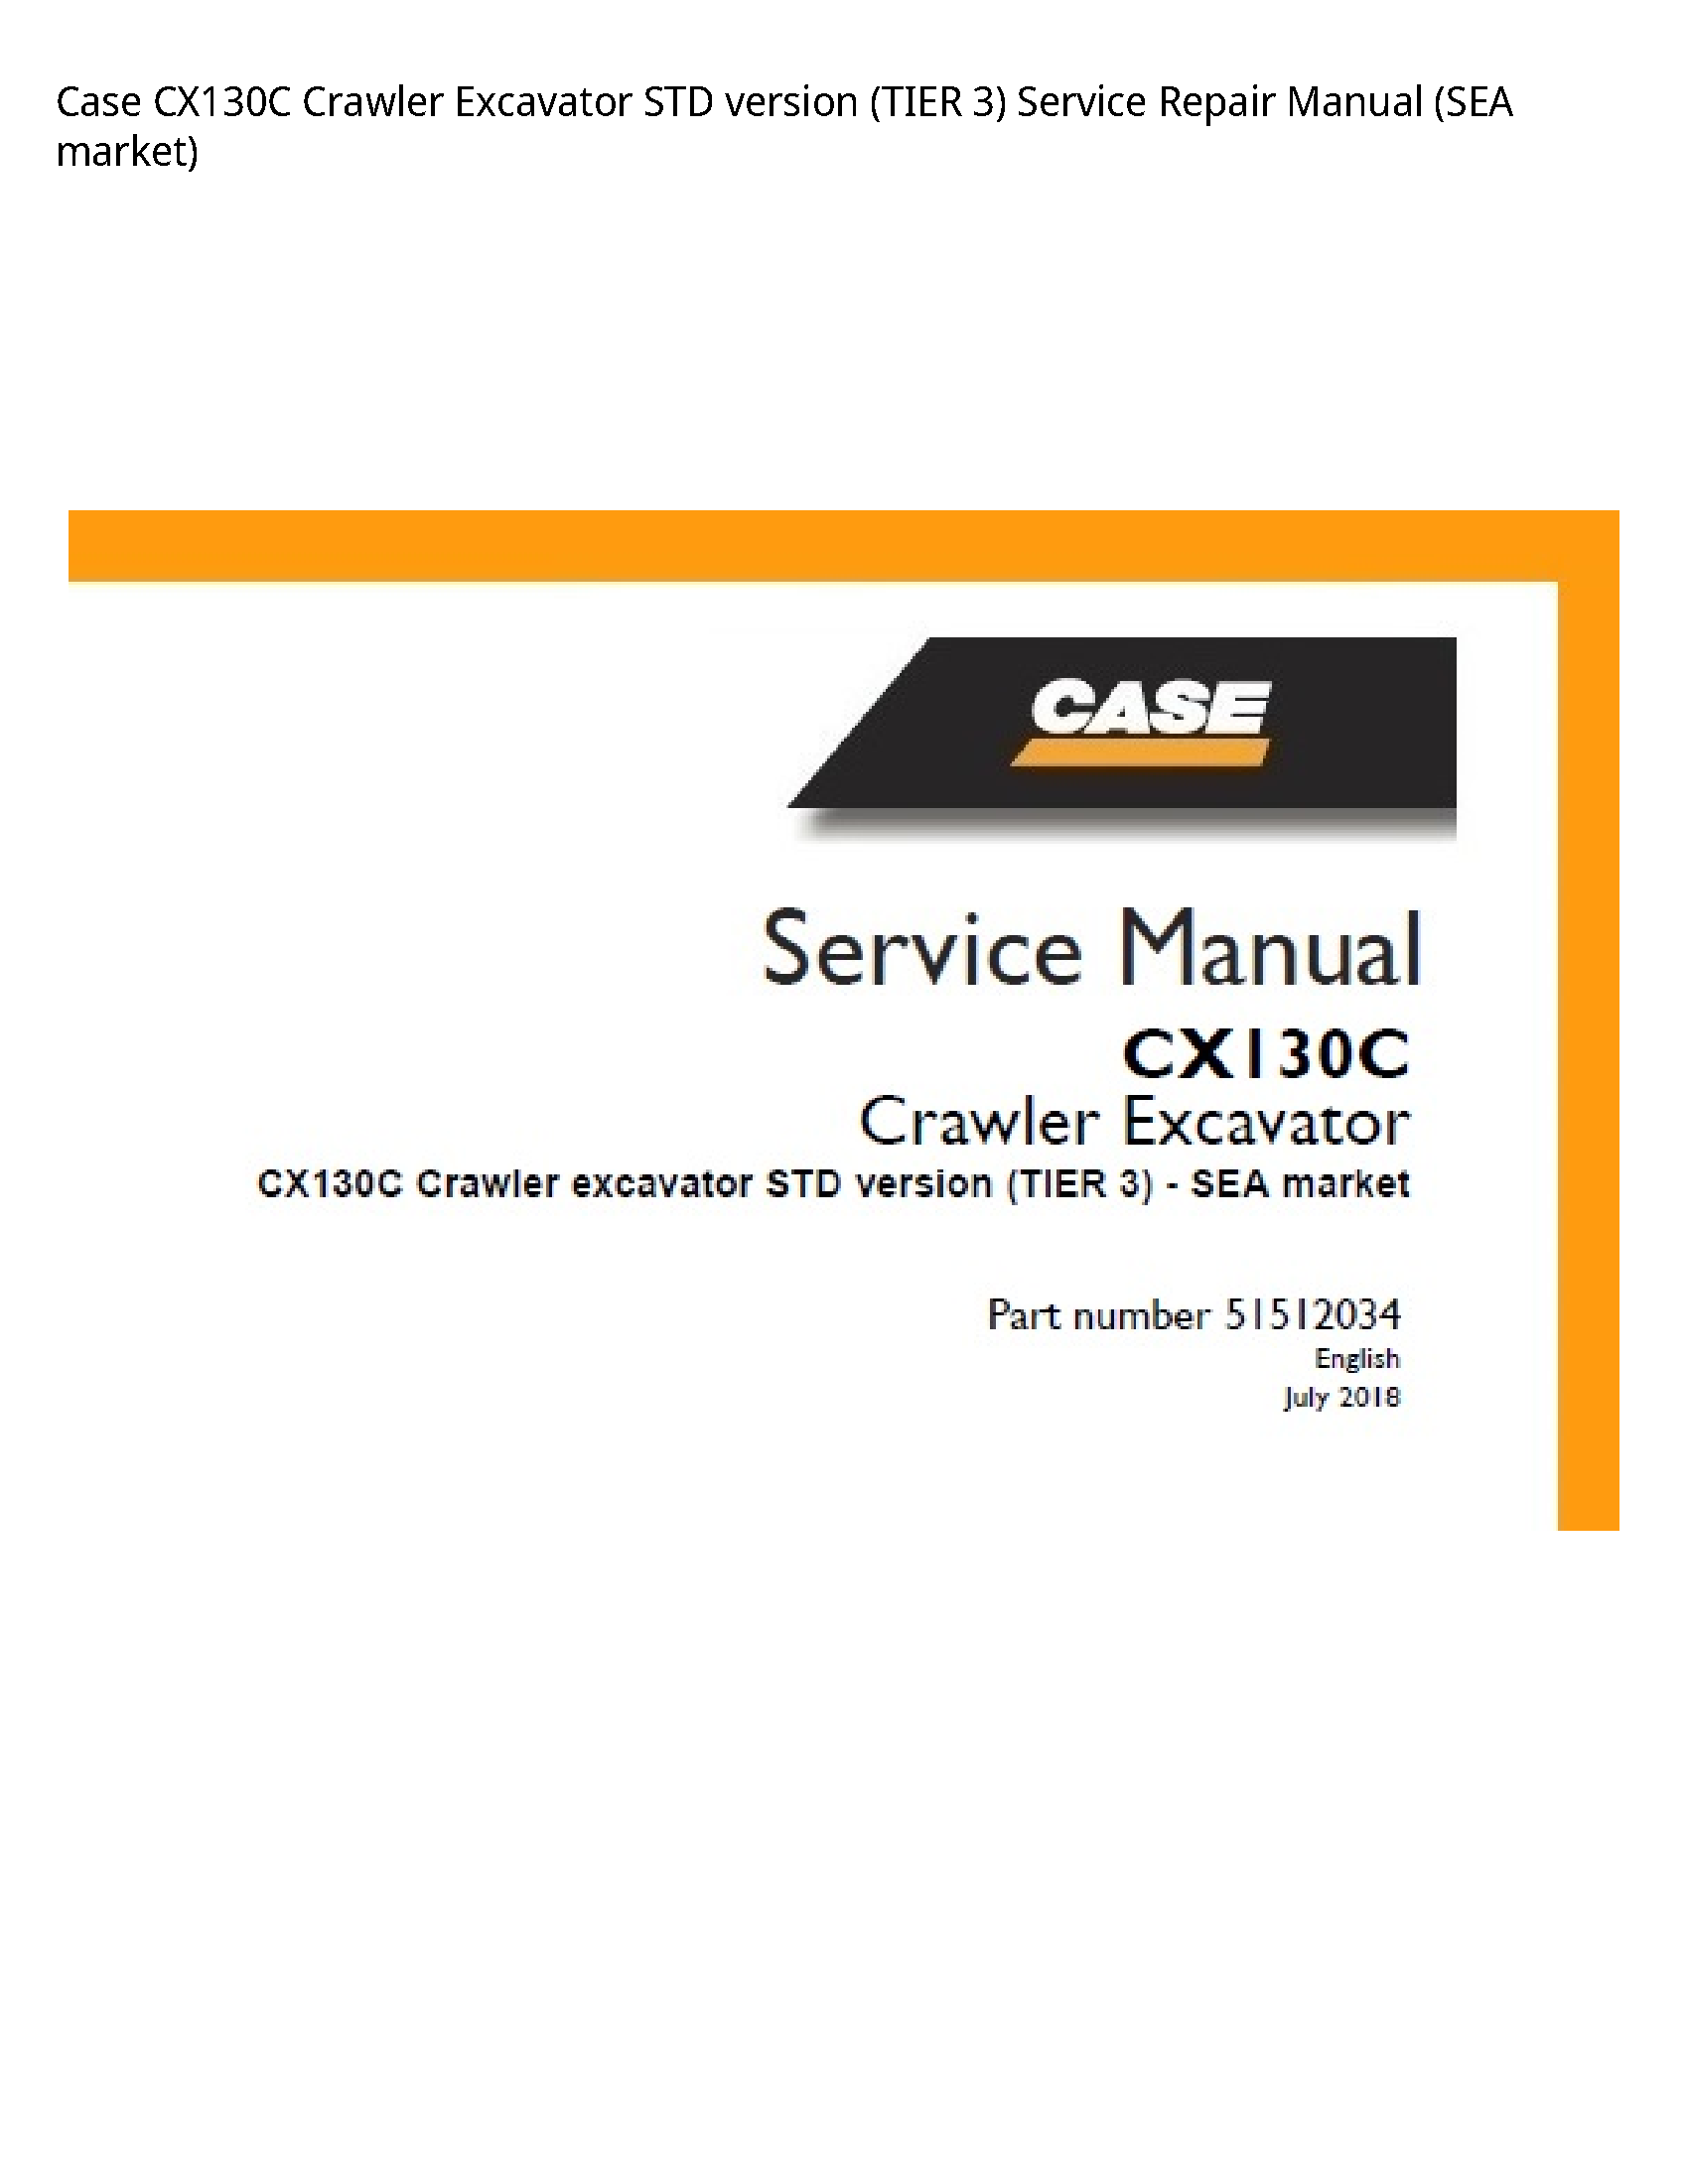 Case/Case IH CX130C Crawler Excavator STD version (TIER manual